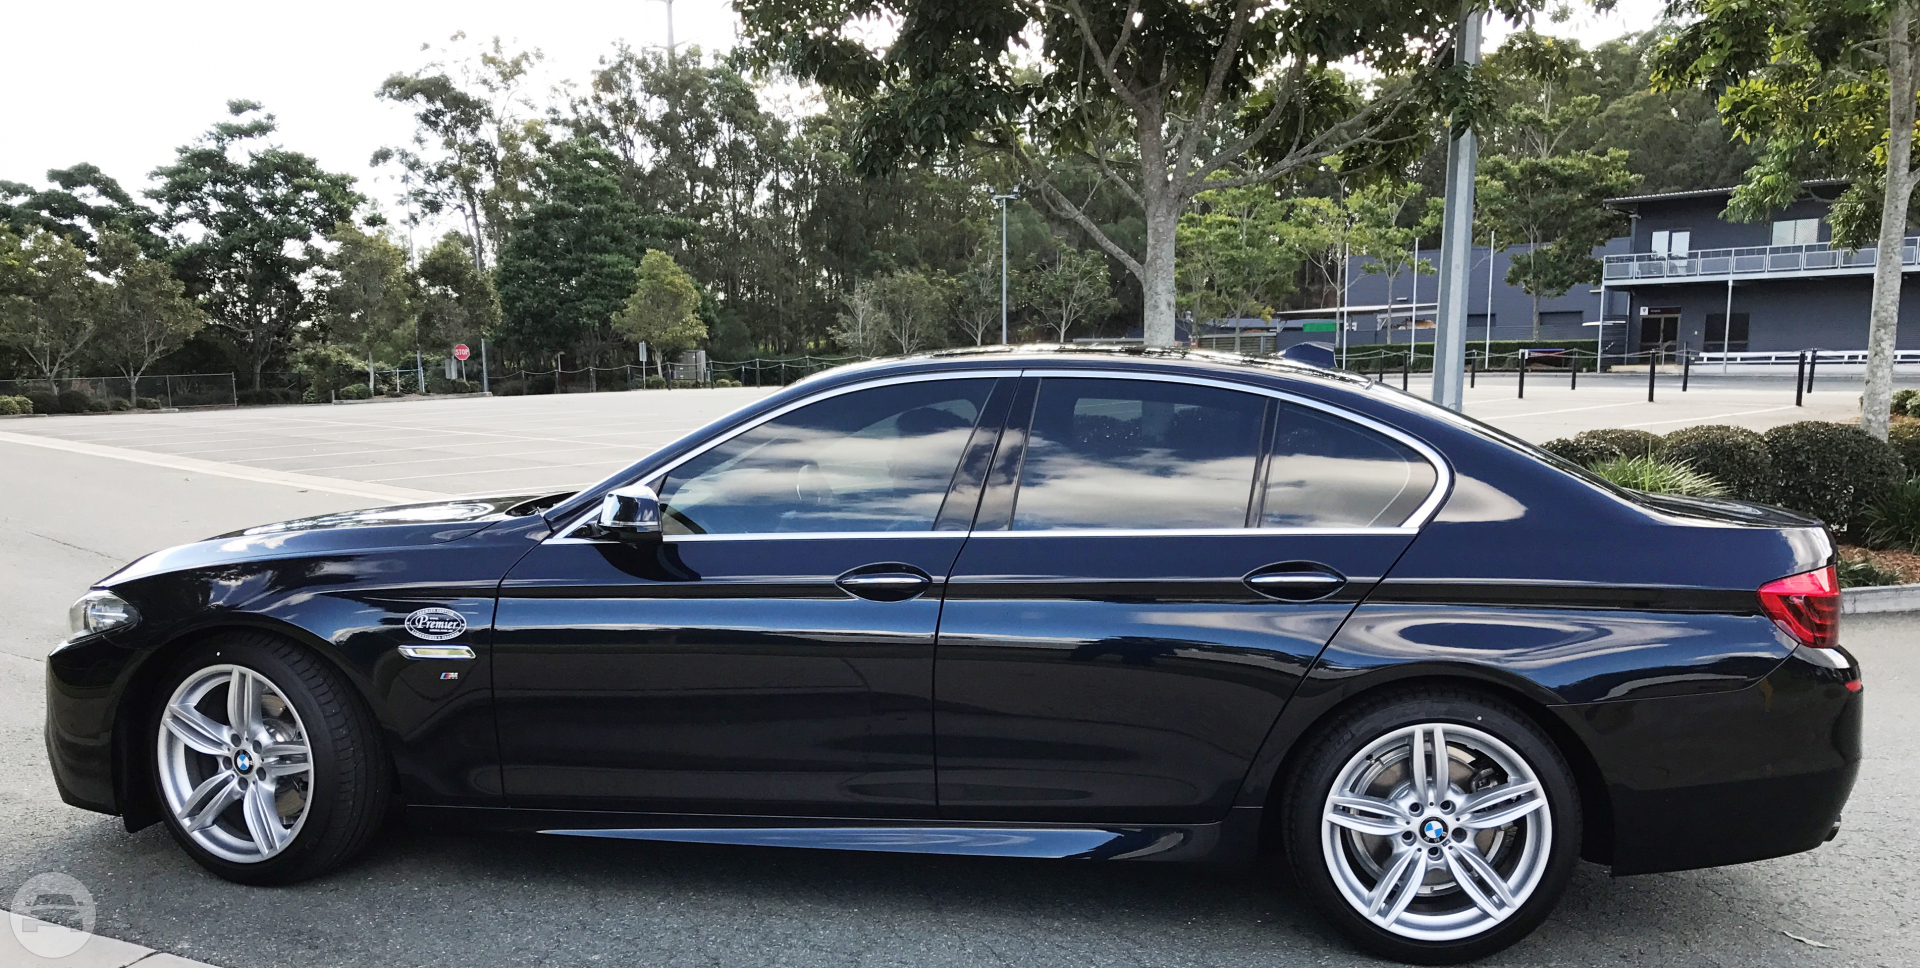 BMW 5 Series
Sedan /
Gold Coast QLD, Australia

 / Hourly AUD$ 0.00
